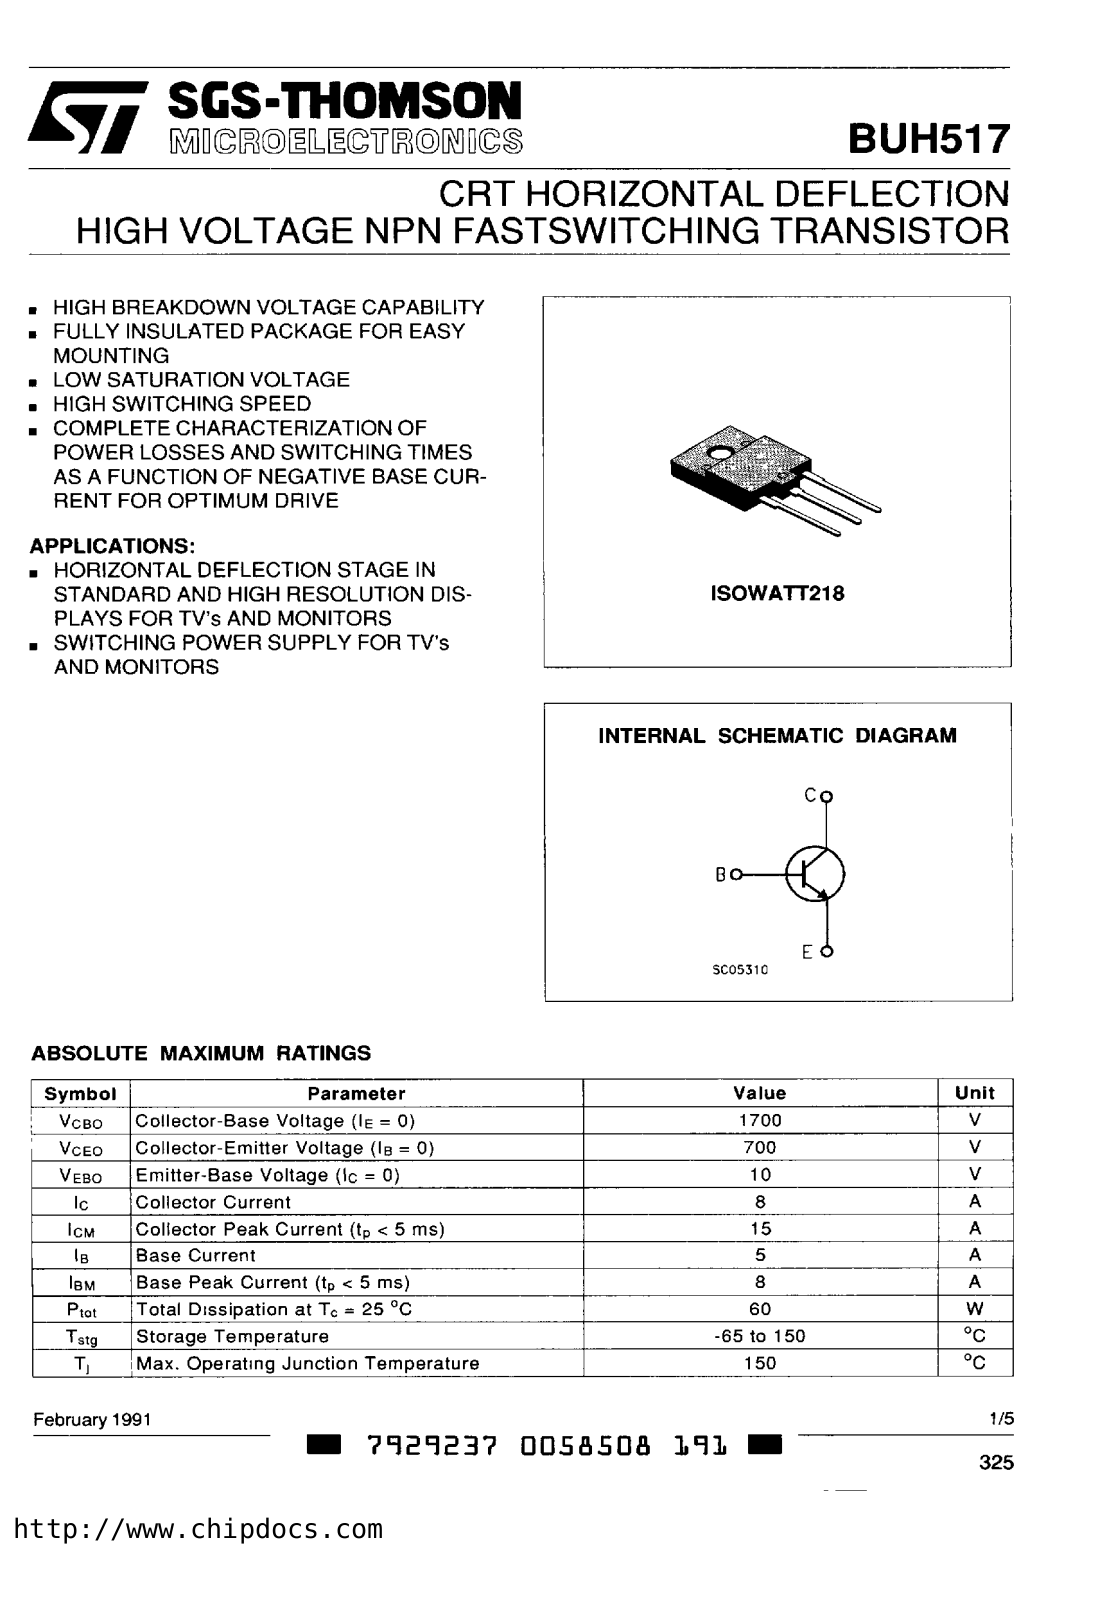 SGS Thomson Microelectronics BUH517 Datasheet